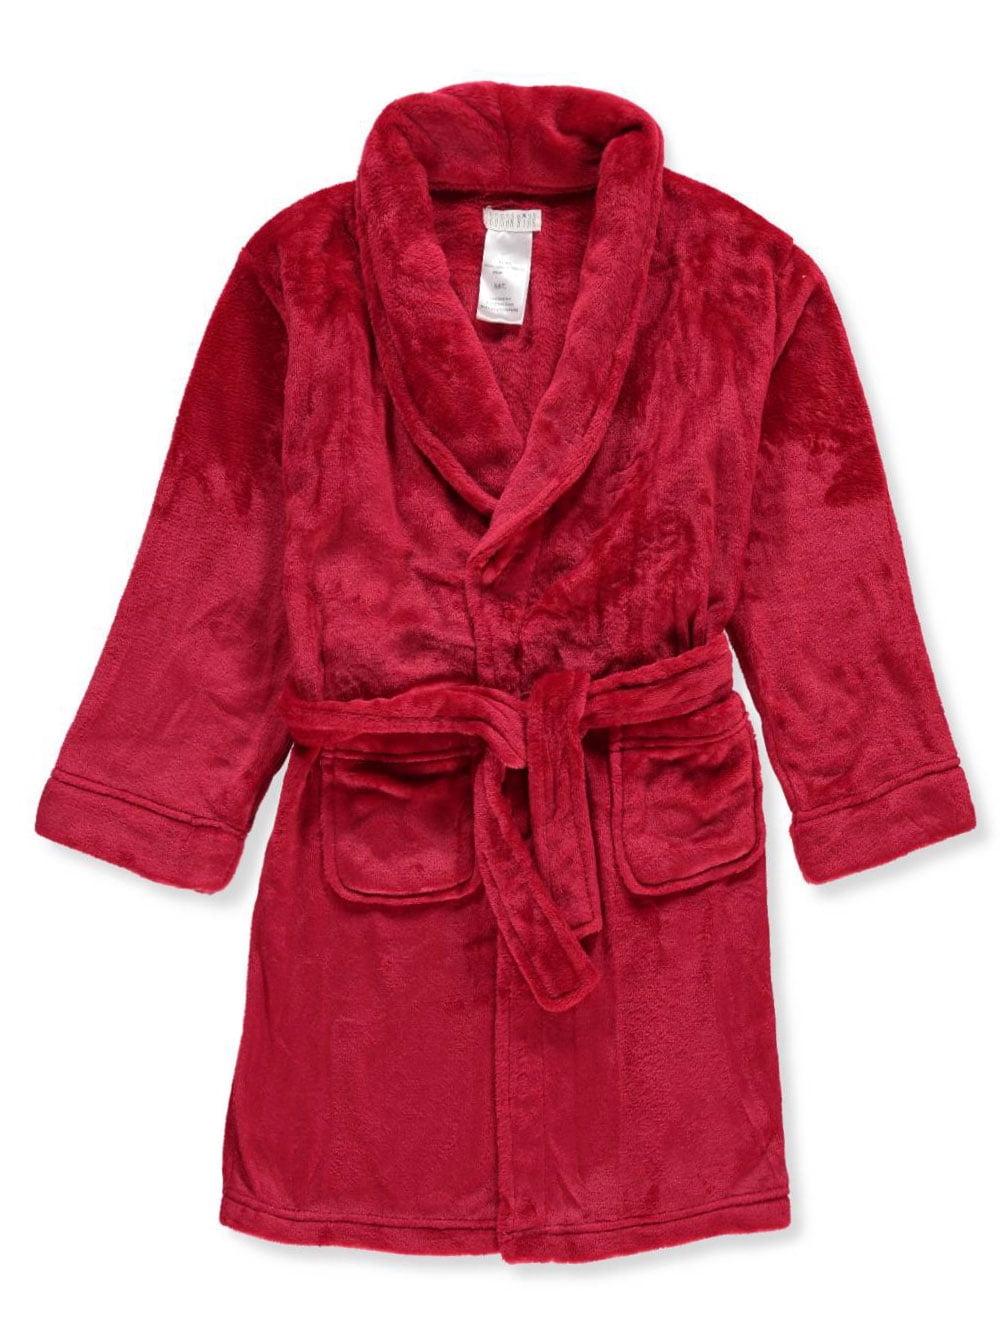 Komar Kids - Komar Kids Girls' Plush Robe - red, 6 - 6x - Walmart.com ...